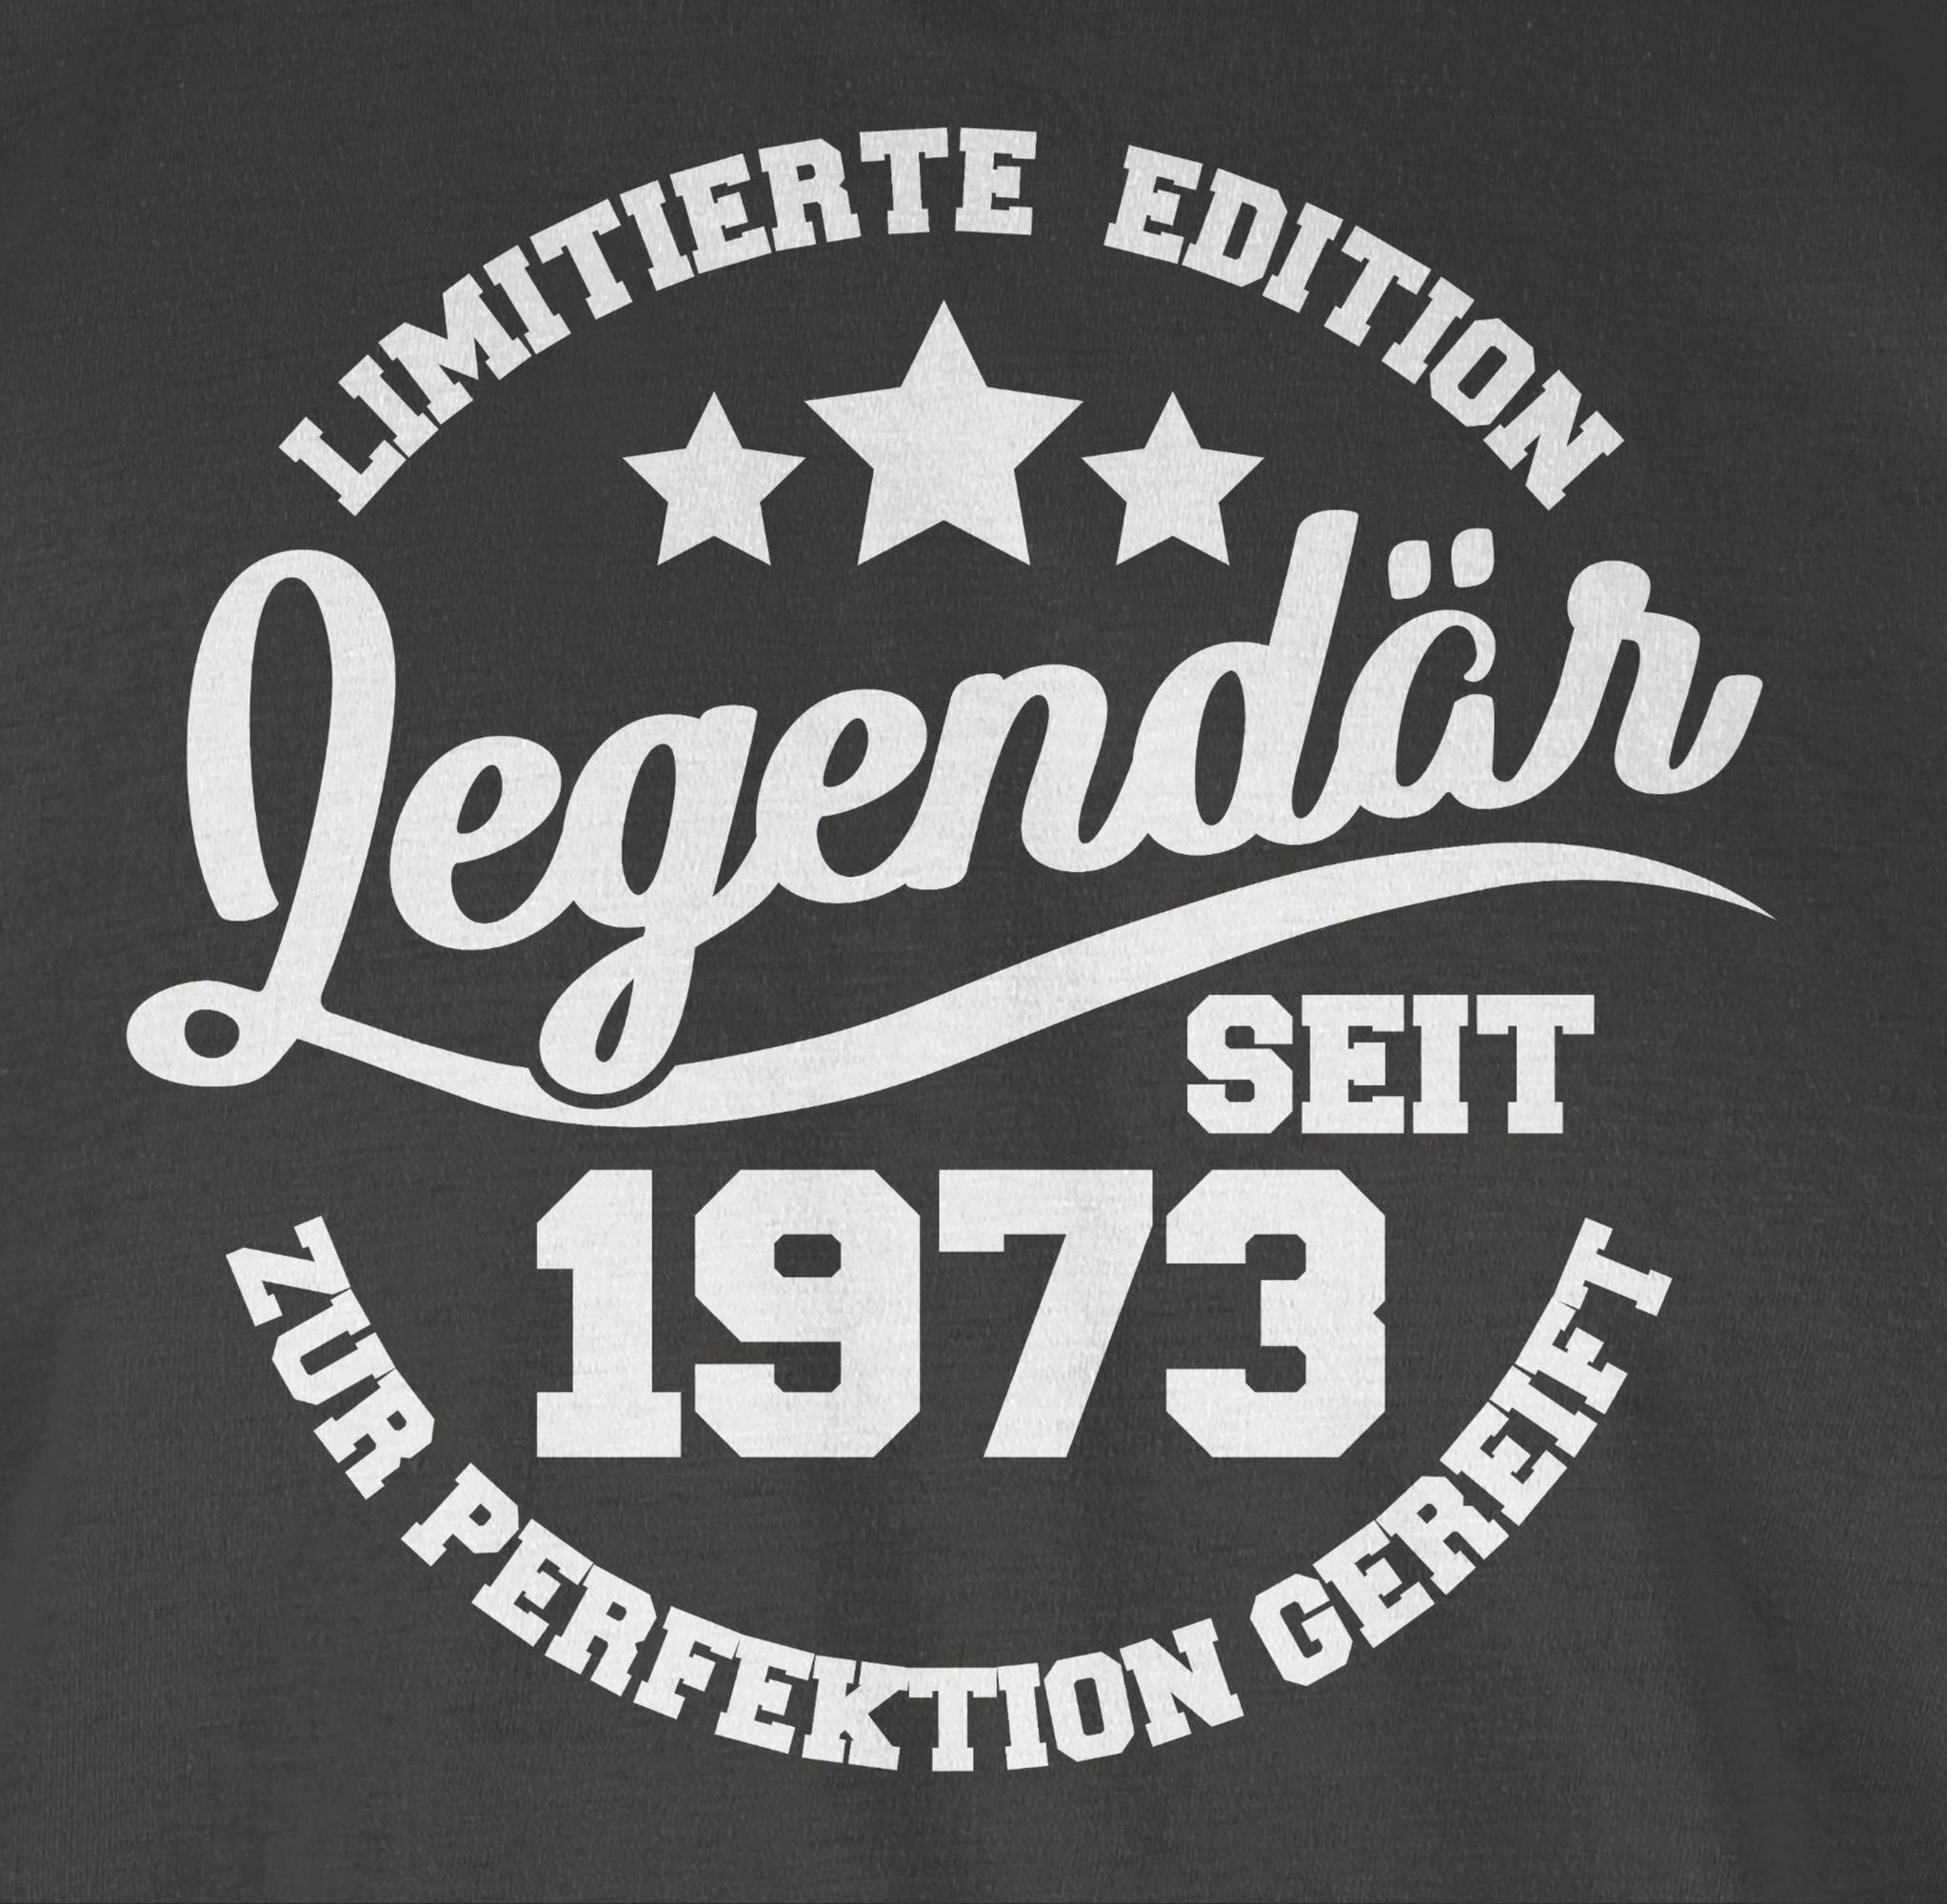 T-Shirt seit Legendär 3 1973 50. Shirtracer Geburtstag Dunkelgrau